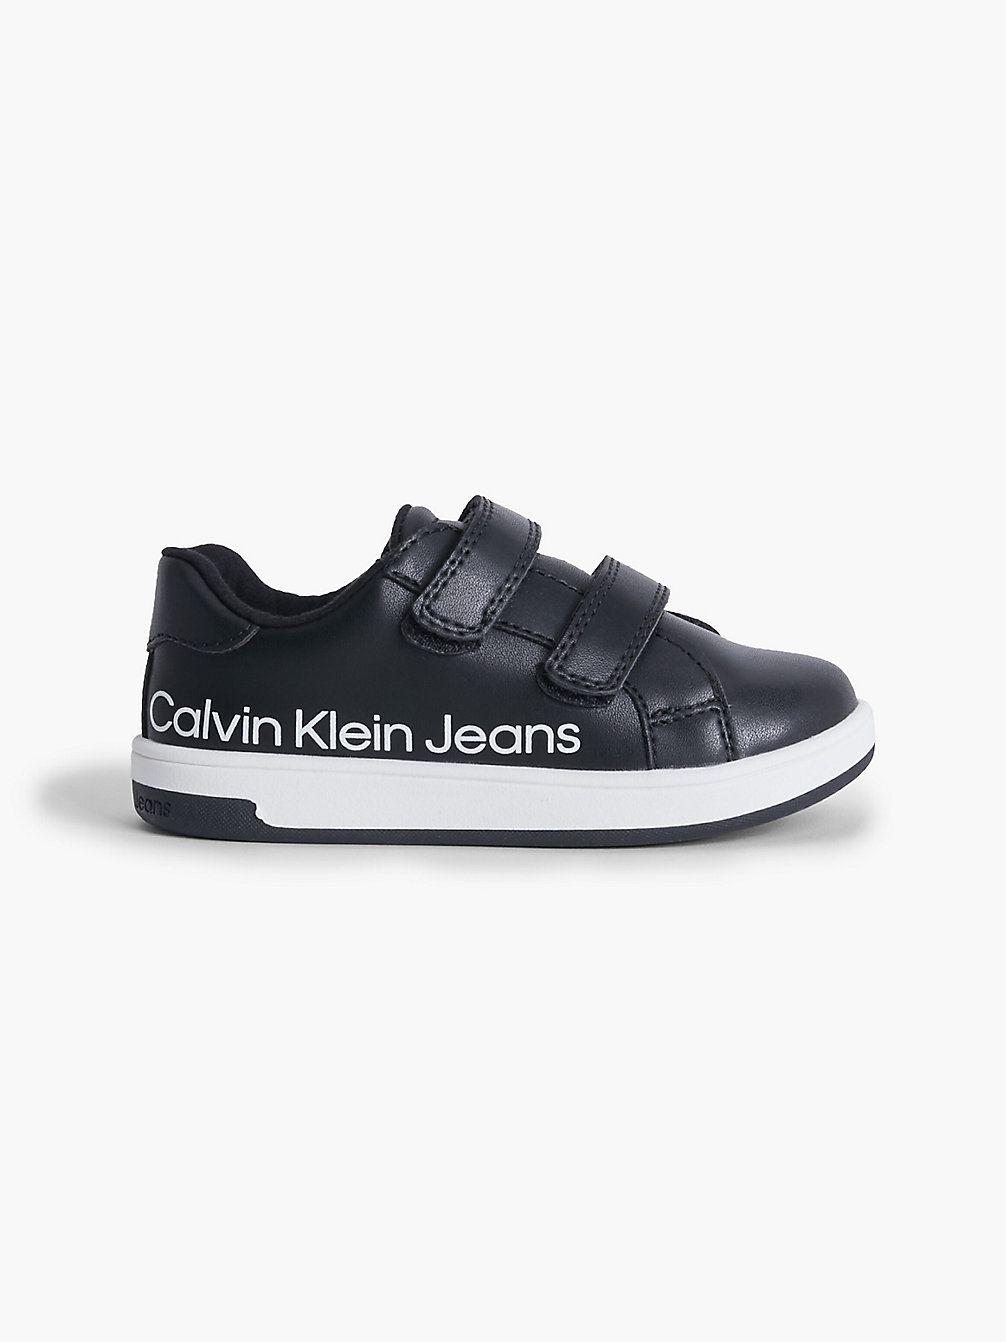 BLACK Sneakers Riciclate Per Bambini-Primi Passi undefined kids unisex Calvin Klein